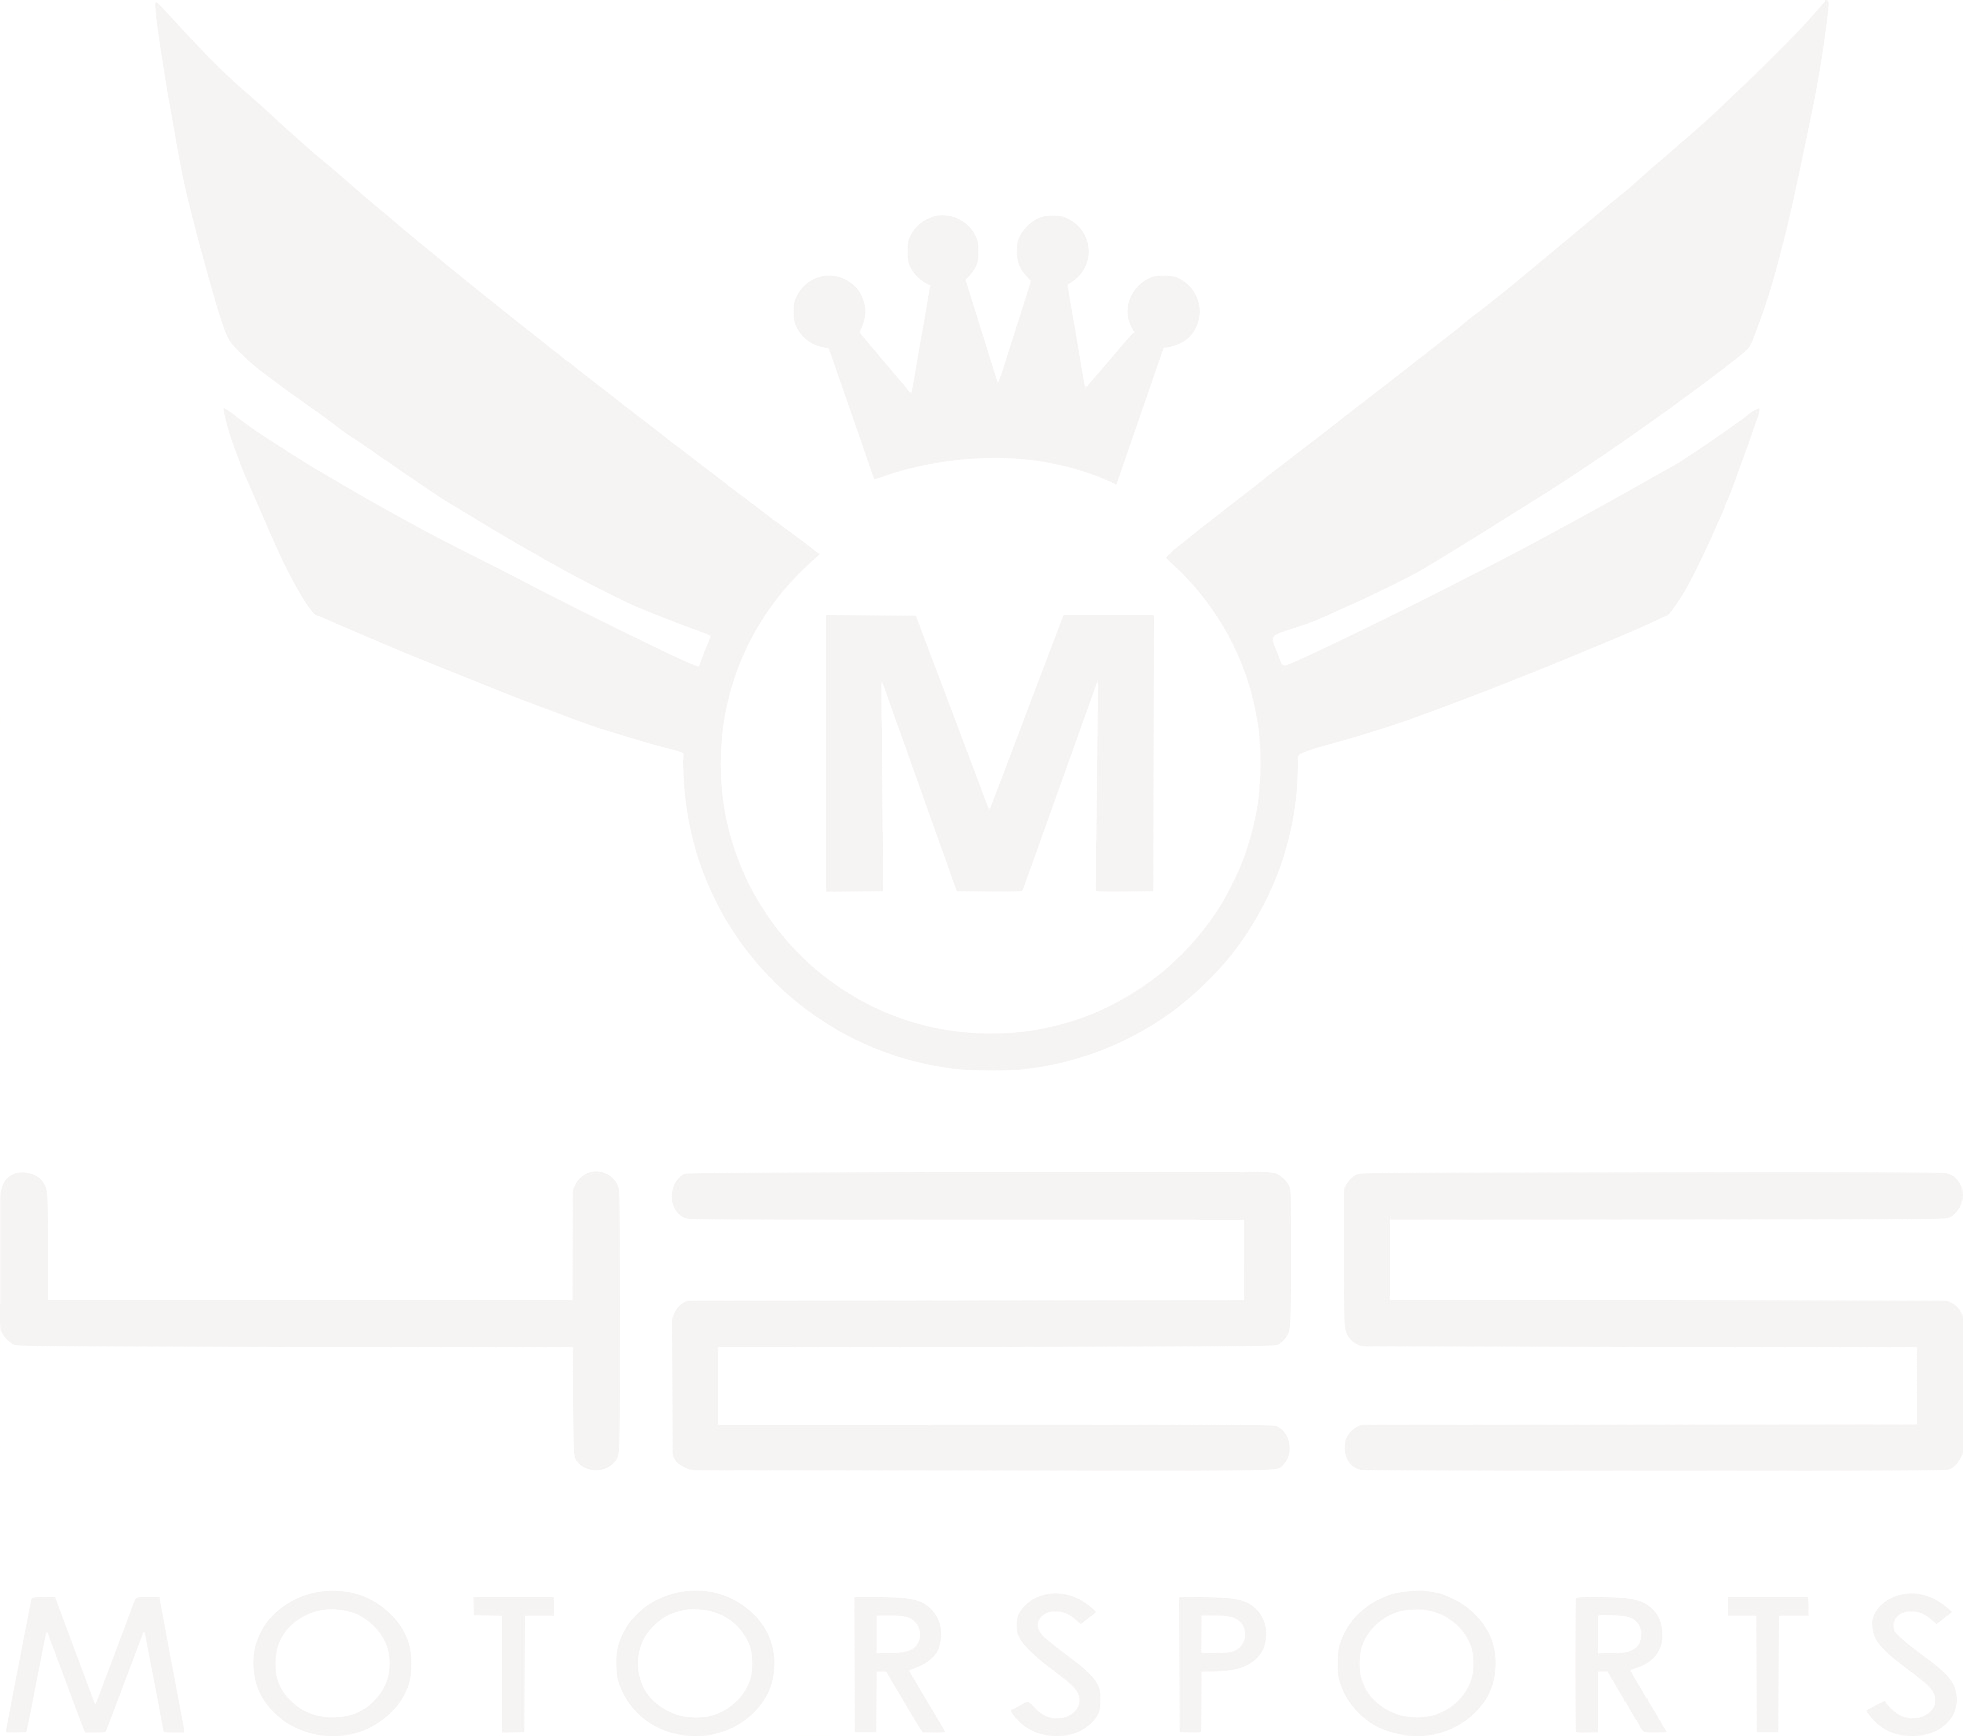 425 Motorsports